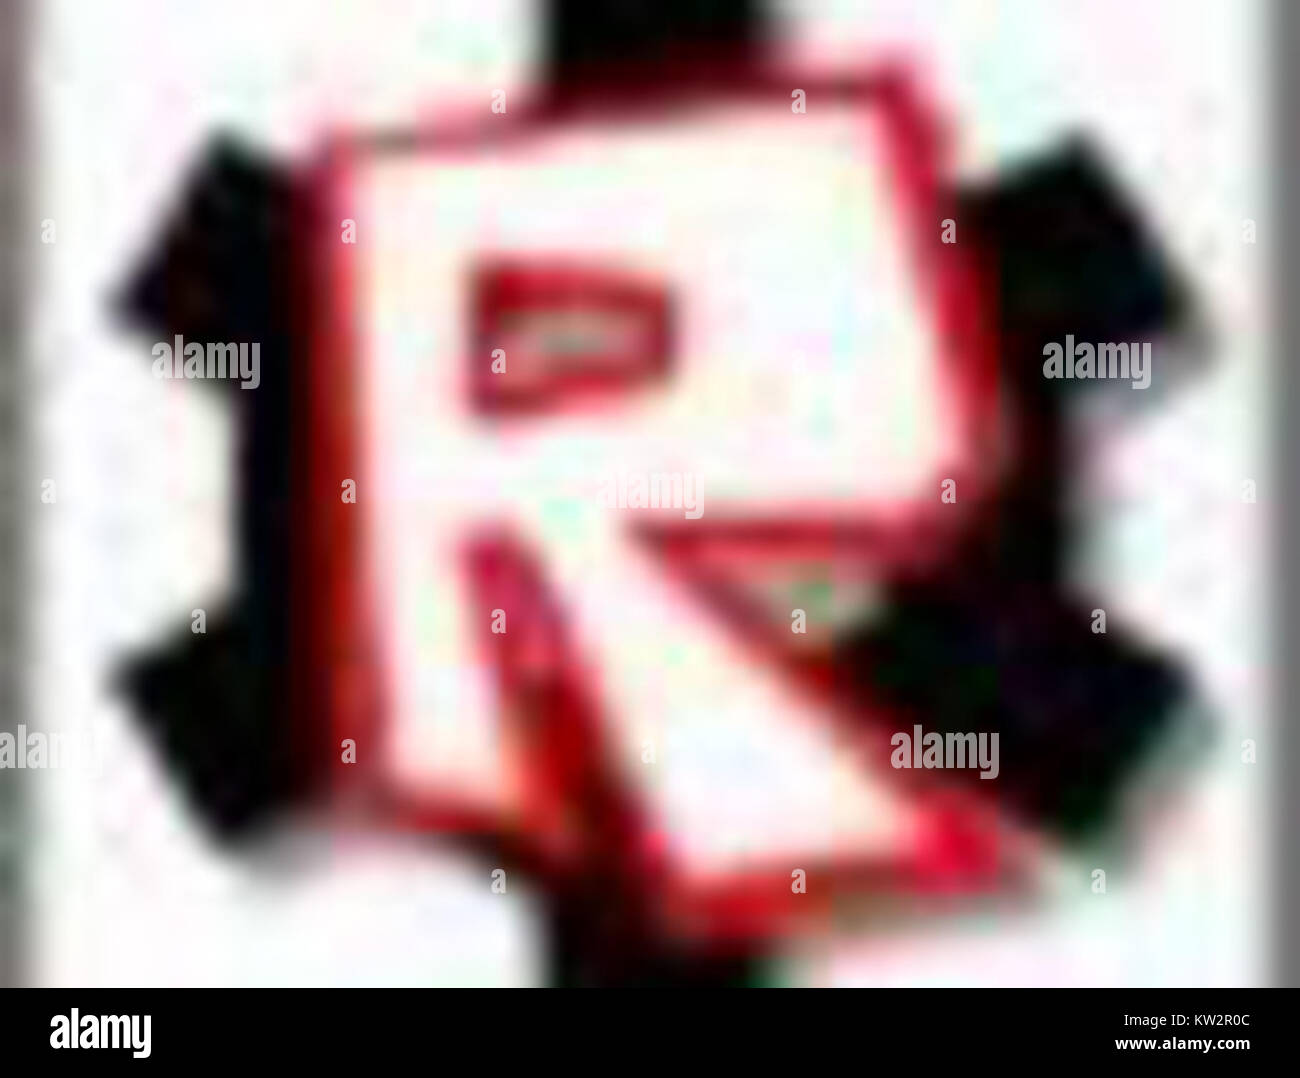 Roblox Logo Brag Stock Photo Alamy - picture of the roblox logo